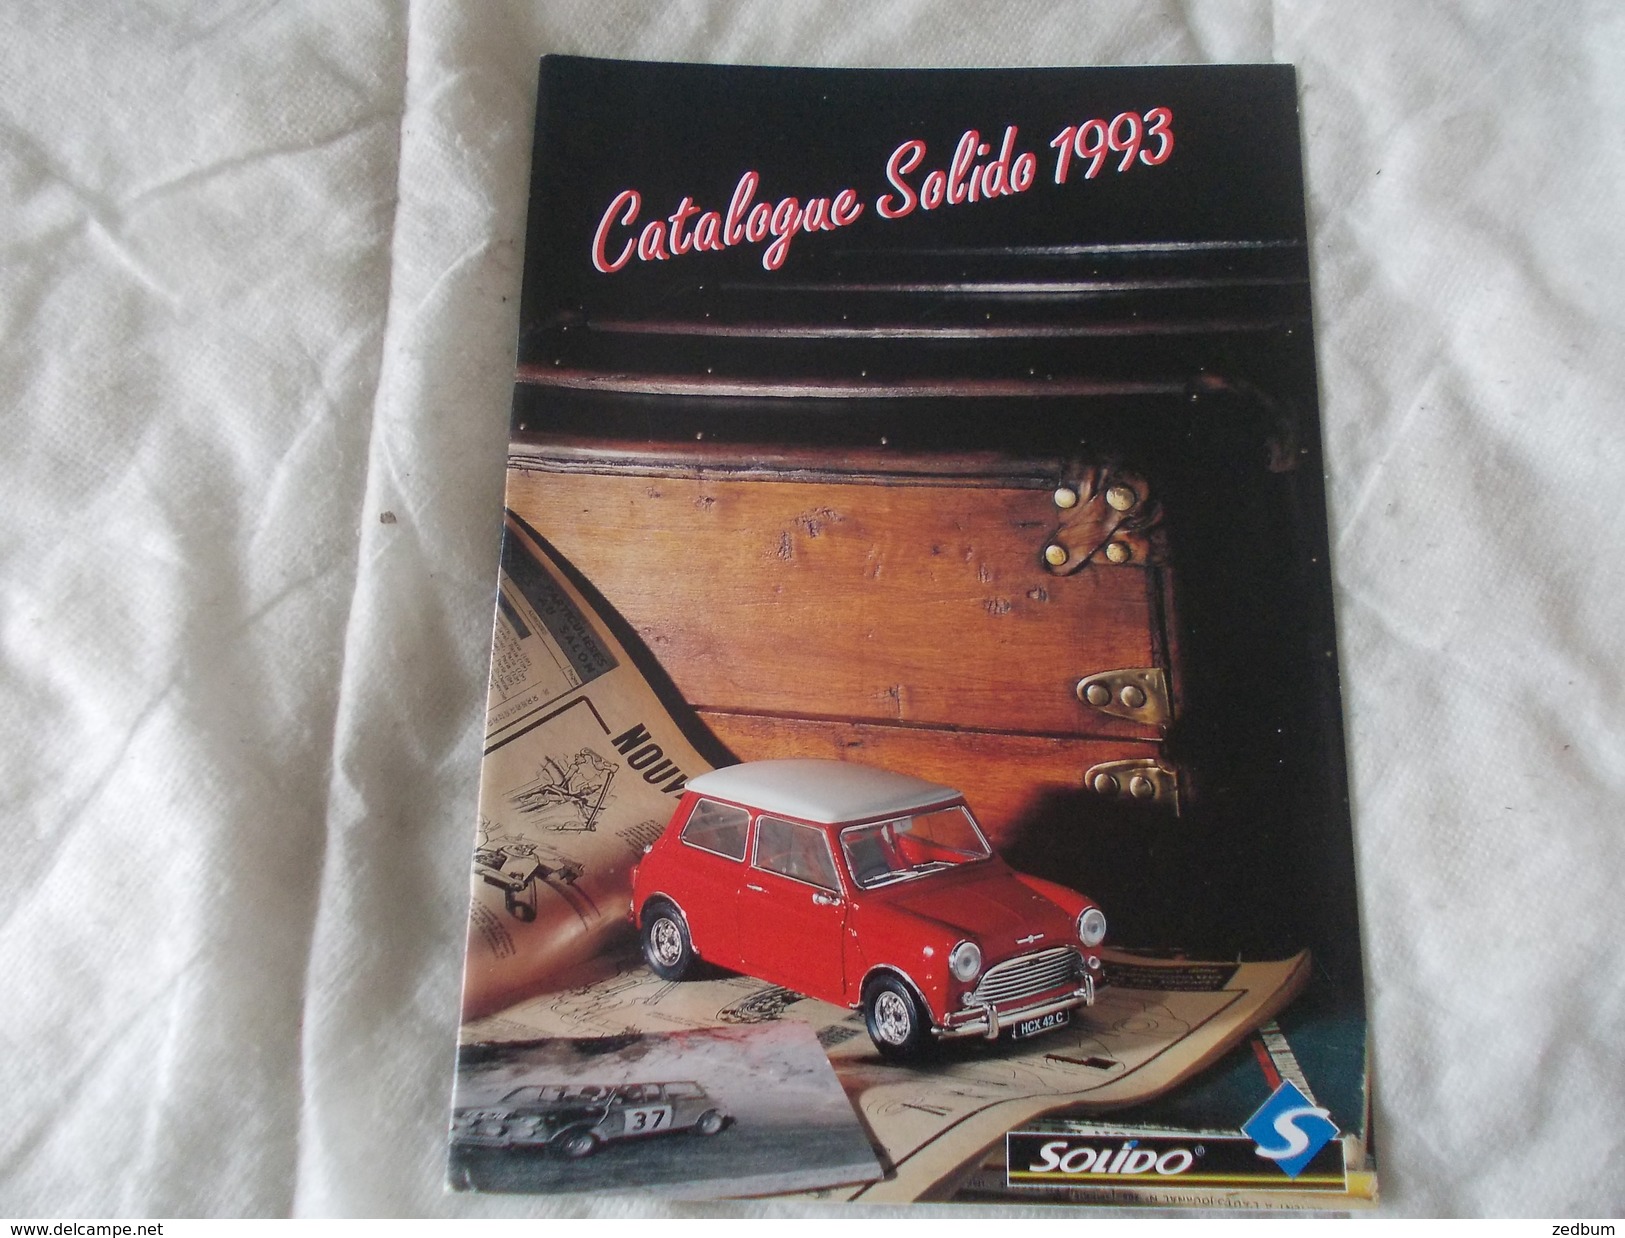 Catalogue Solido 1993 - Model Making